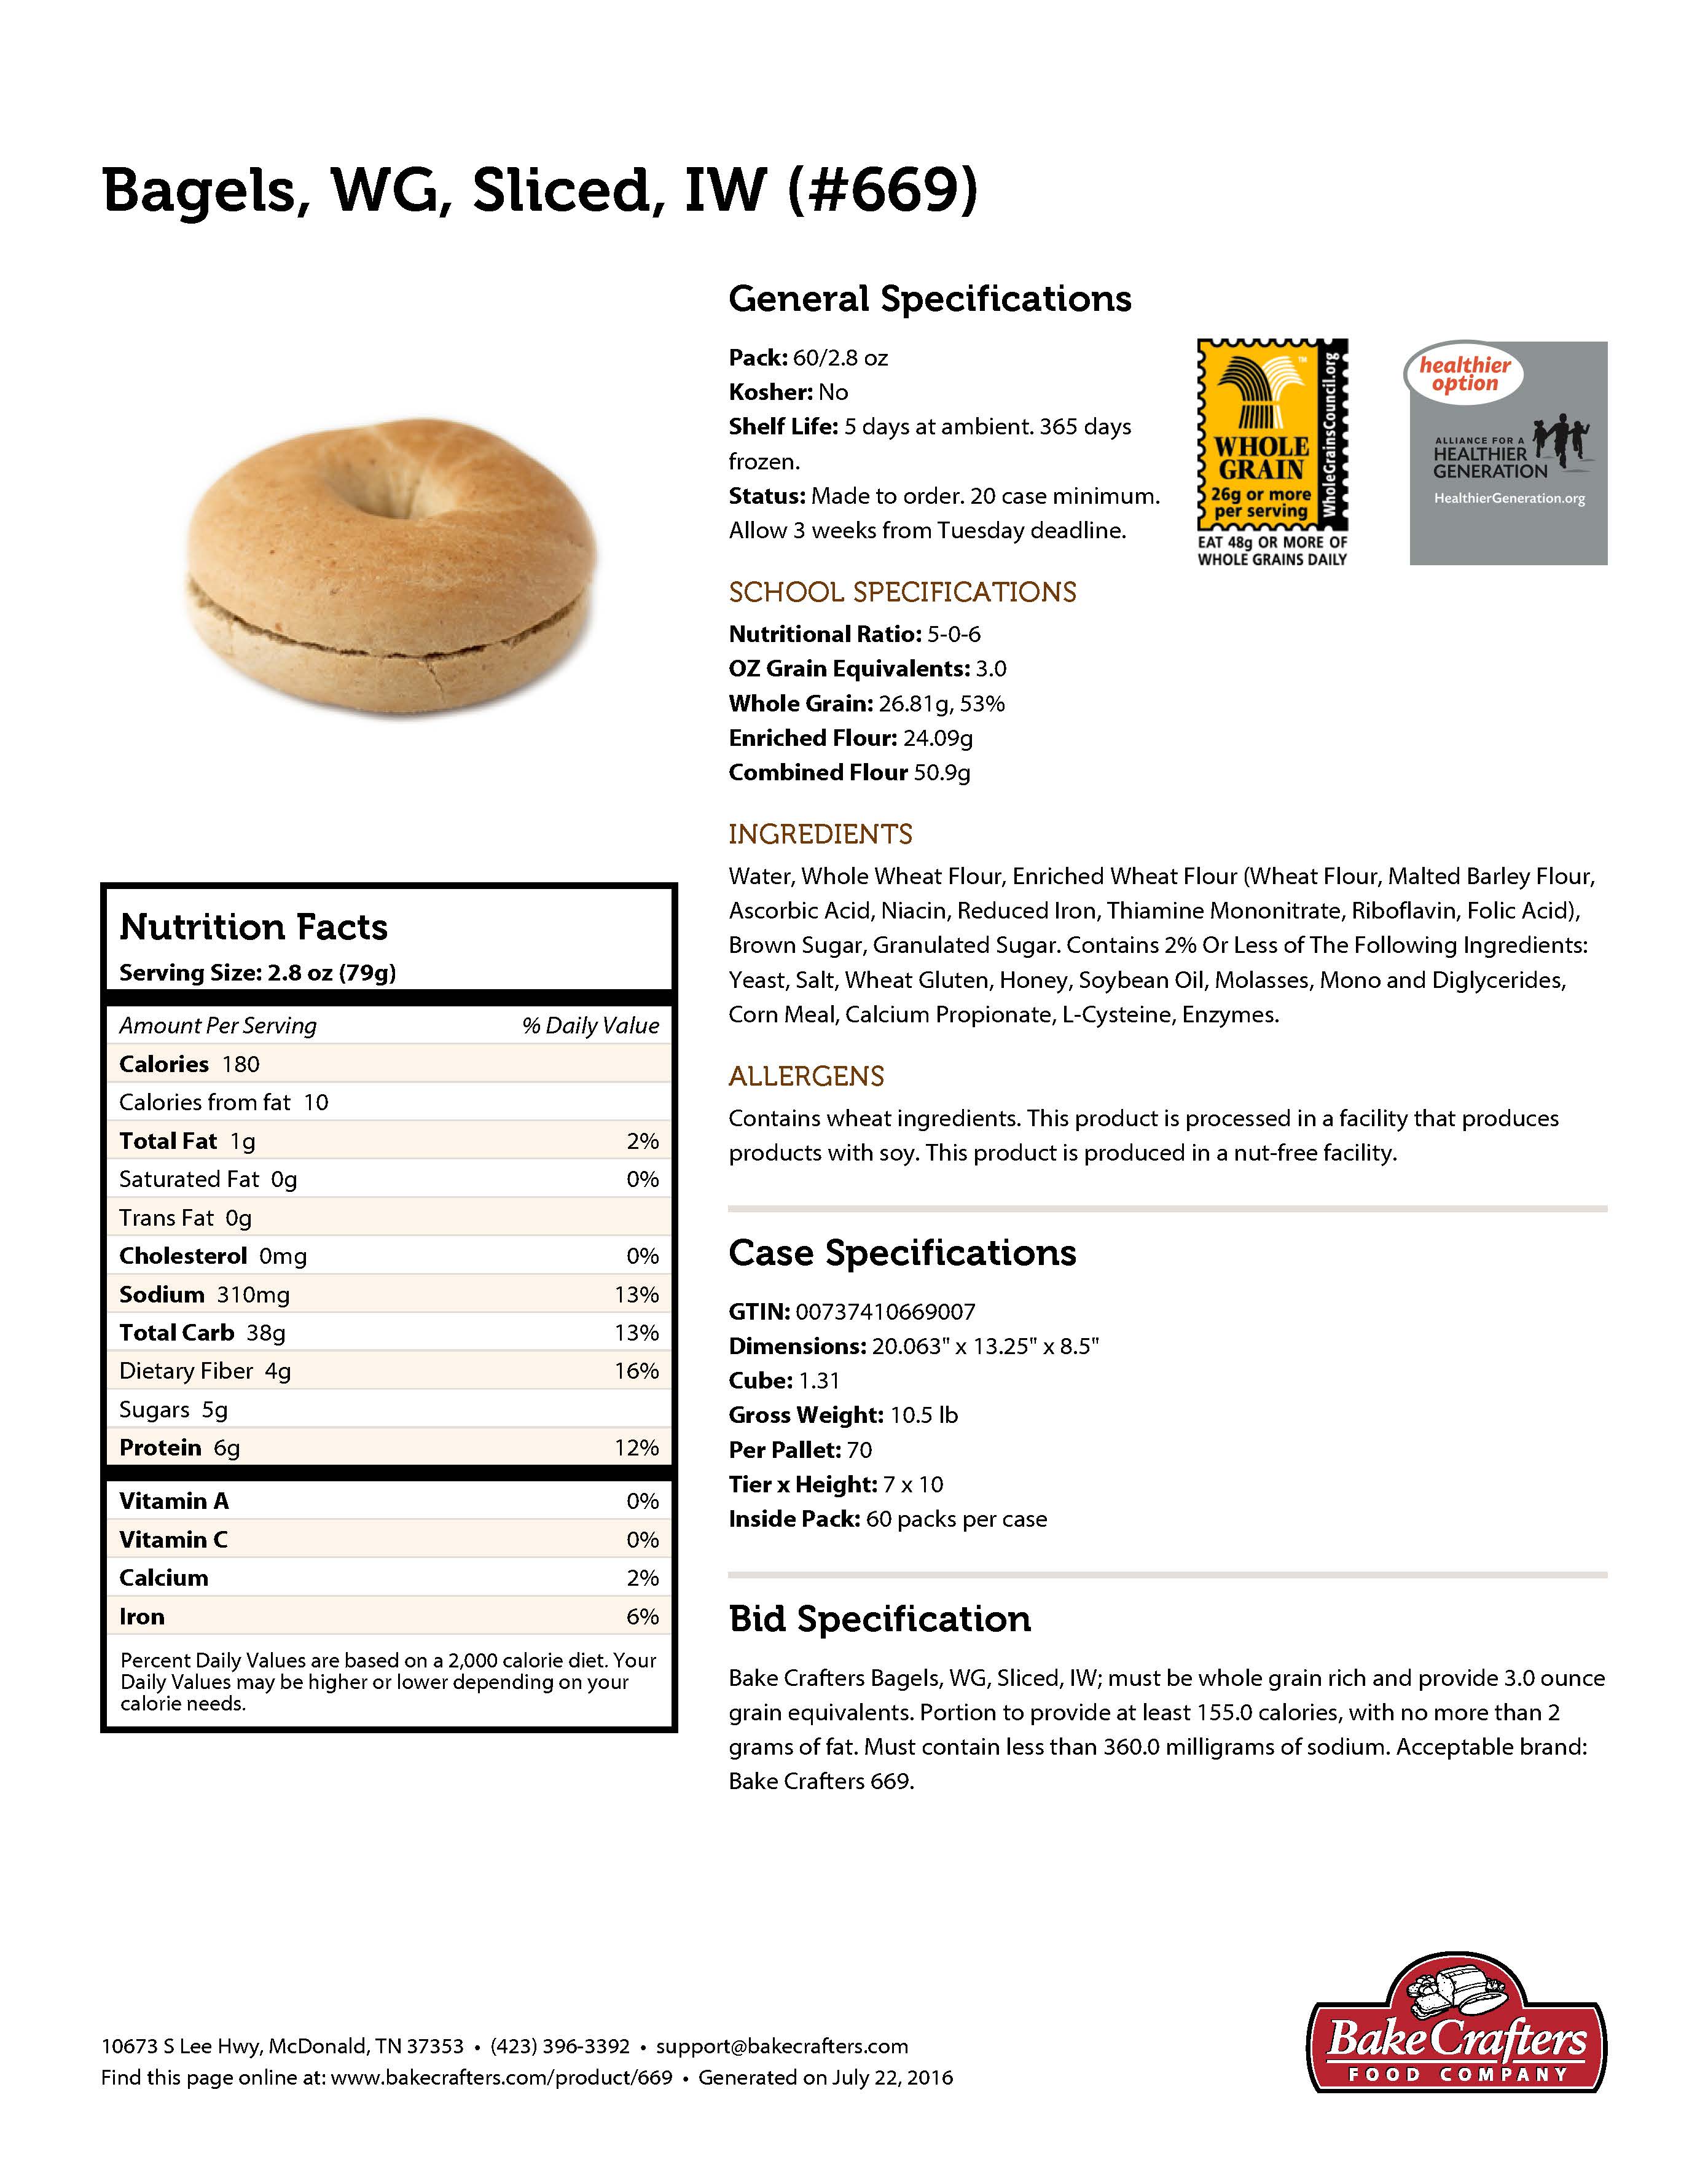 Bake Crafters - Bagel Plain WG Sliced IW 02165
